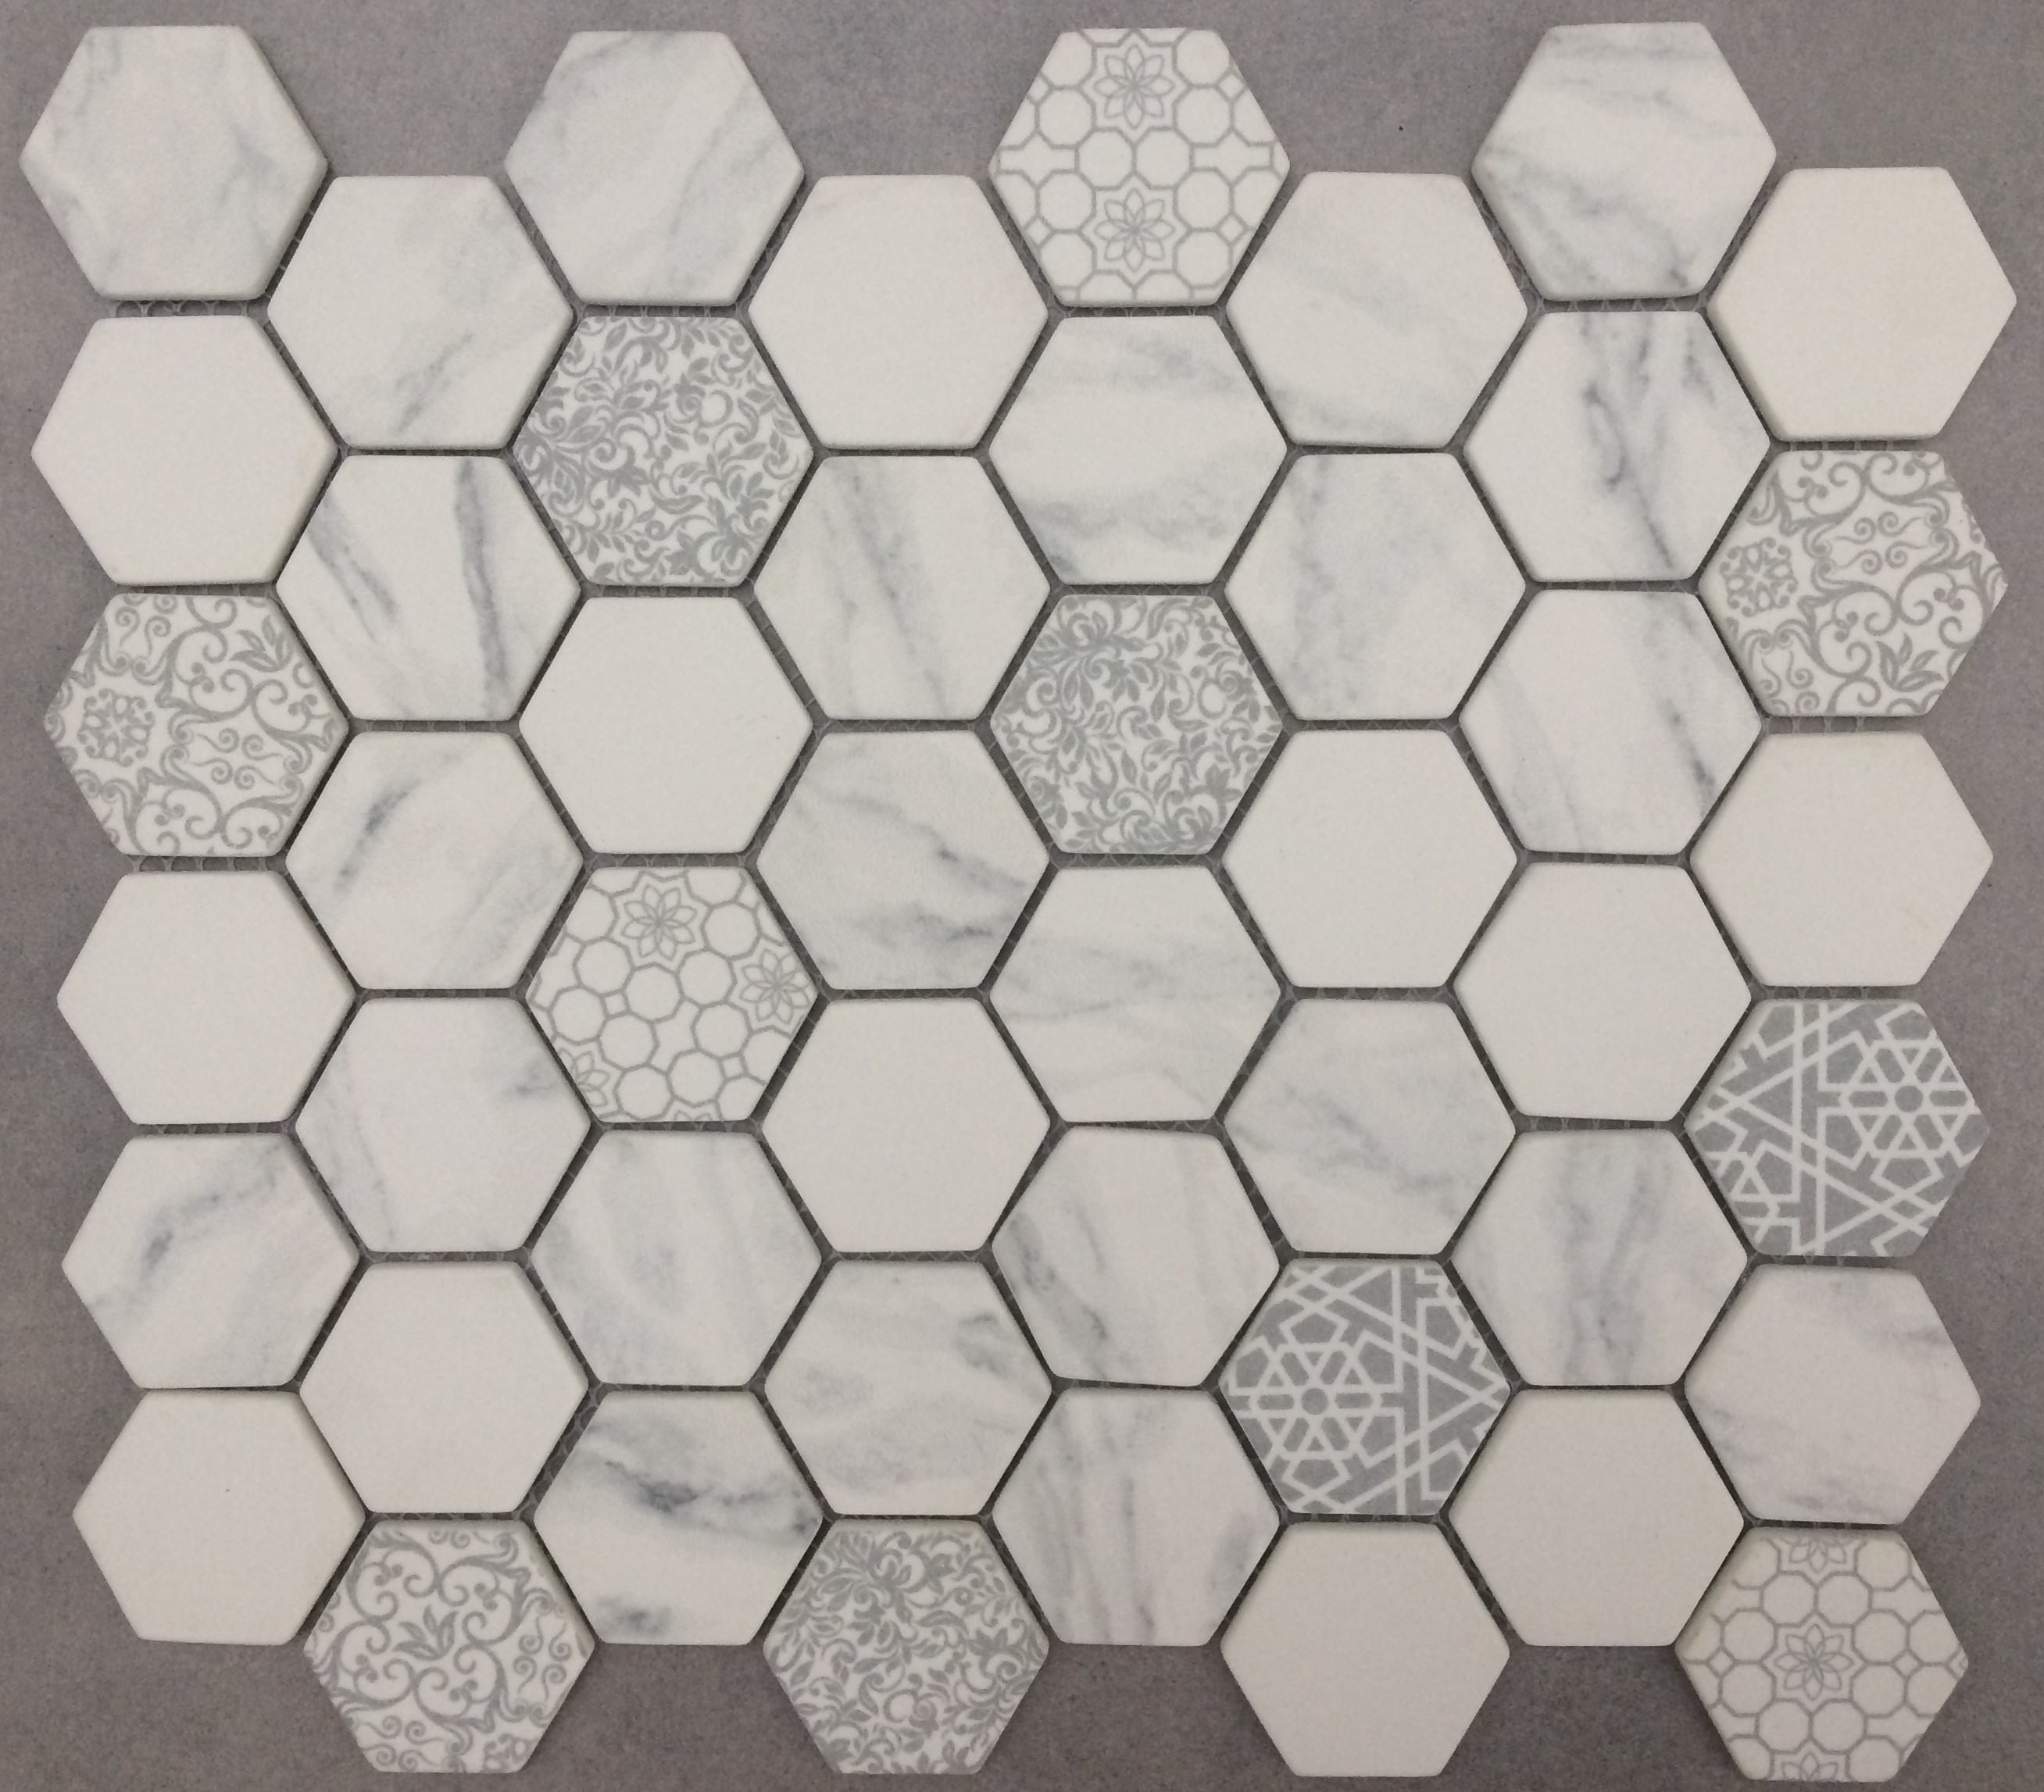 Mosaic MSH003 Mozaika recyklované sklo hexagon 324x280 mm [MSH003]